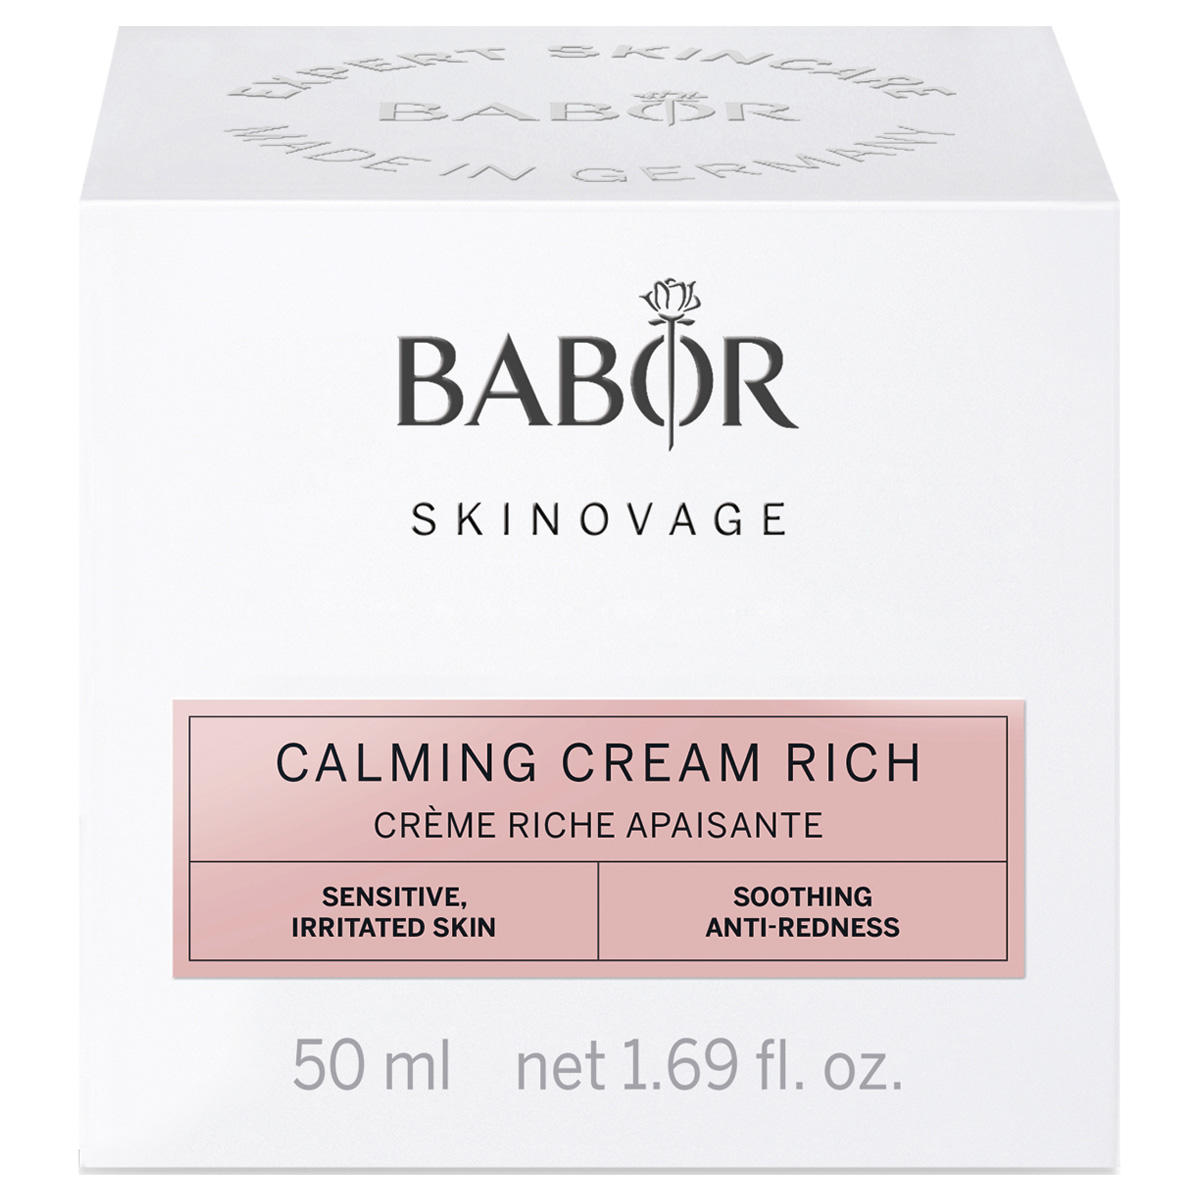 BABOR SKINOVAGE Calming Cream rich 50 ml - 2